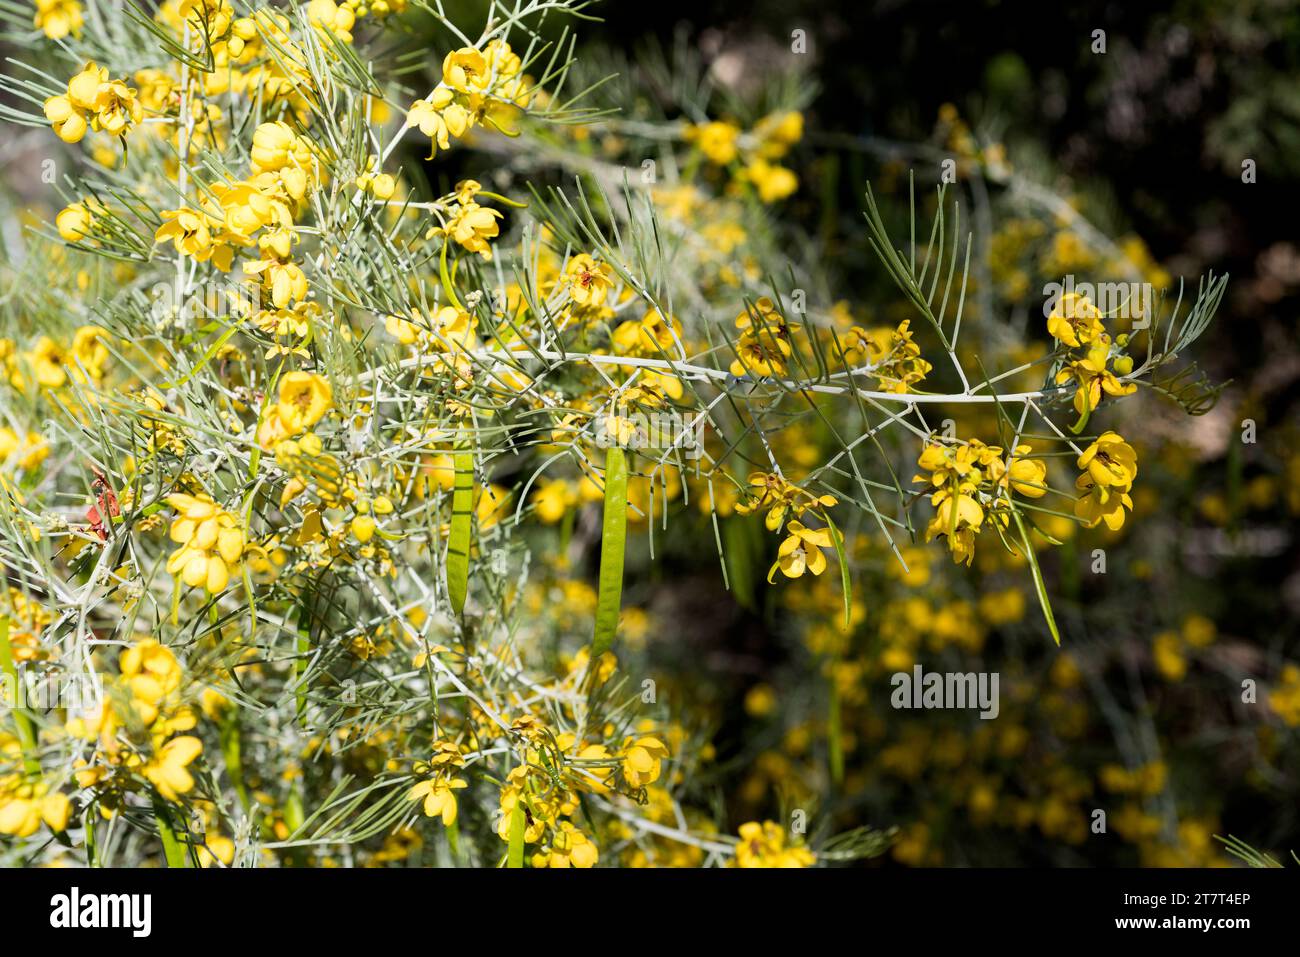 Silver cassia or wormwood cassia (Senna artemisioides) is a shrub endemic to Australia. Stock Photo